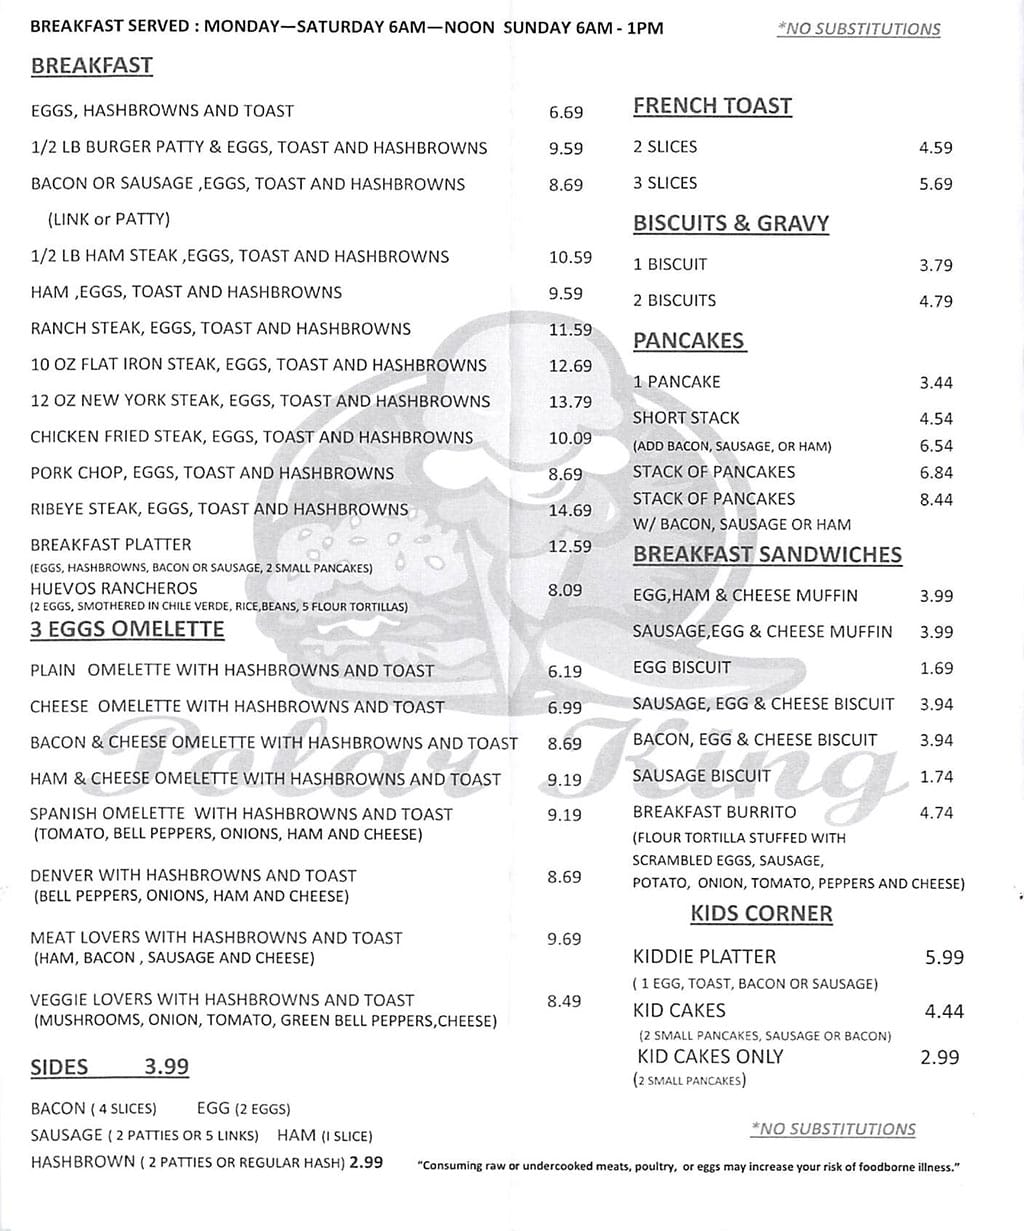 Polar King Drive-Inn menu – SLC menu